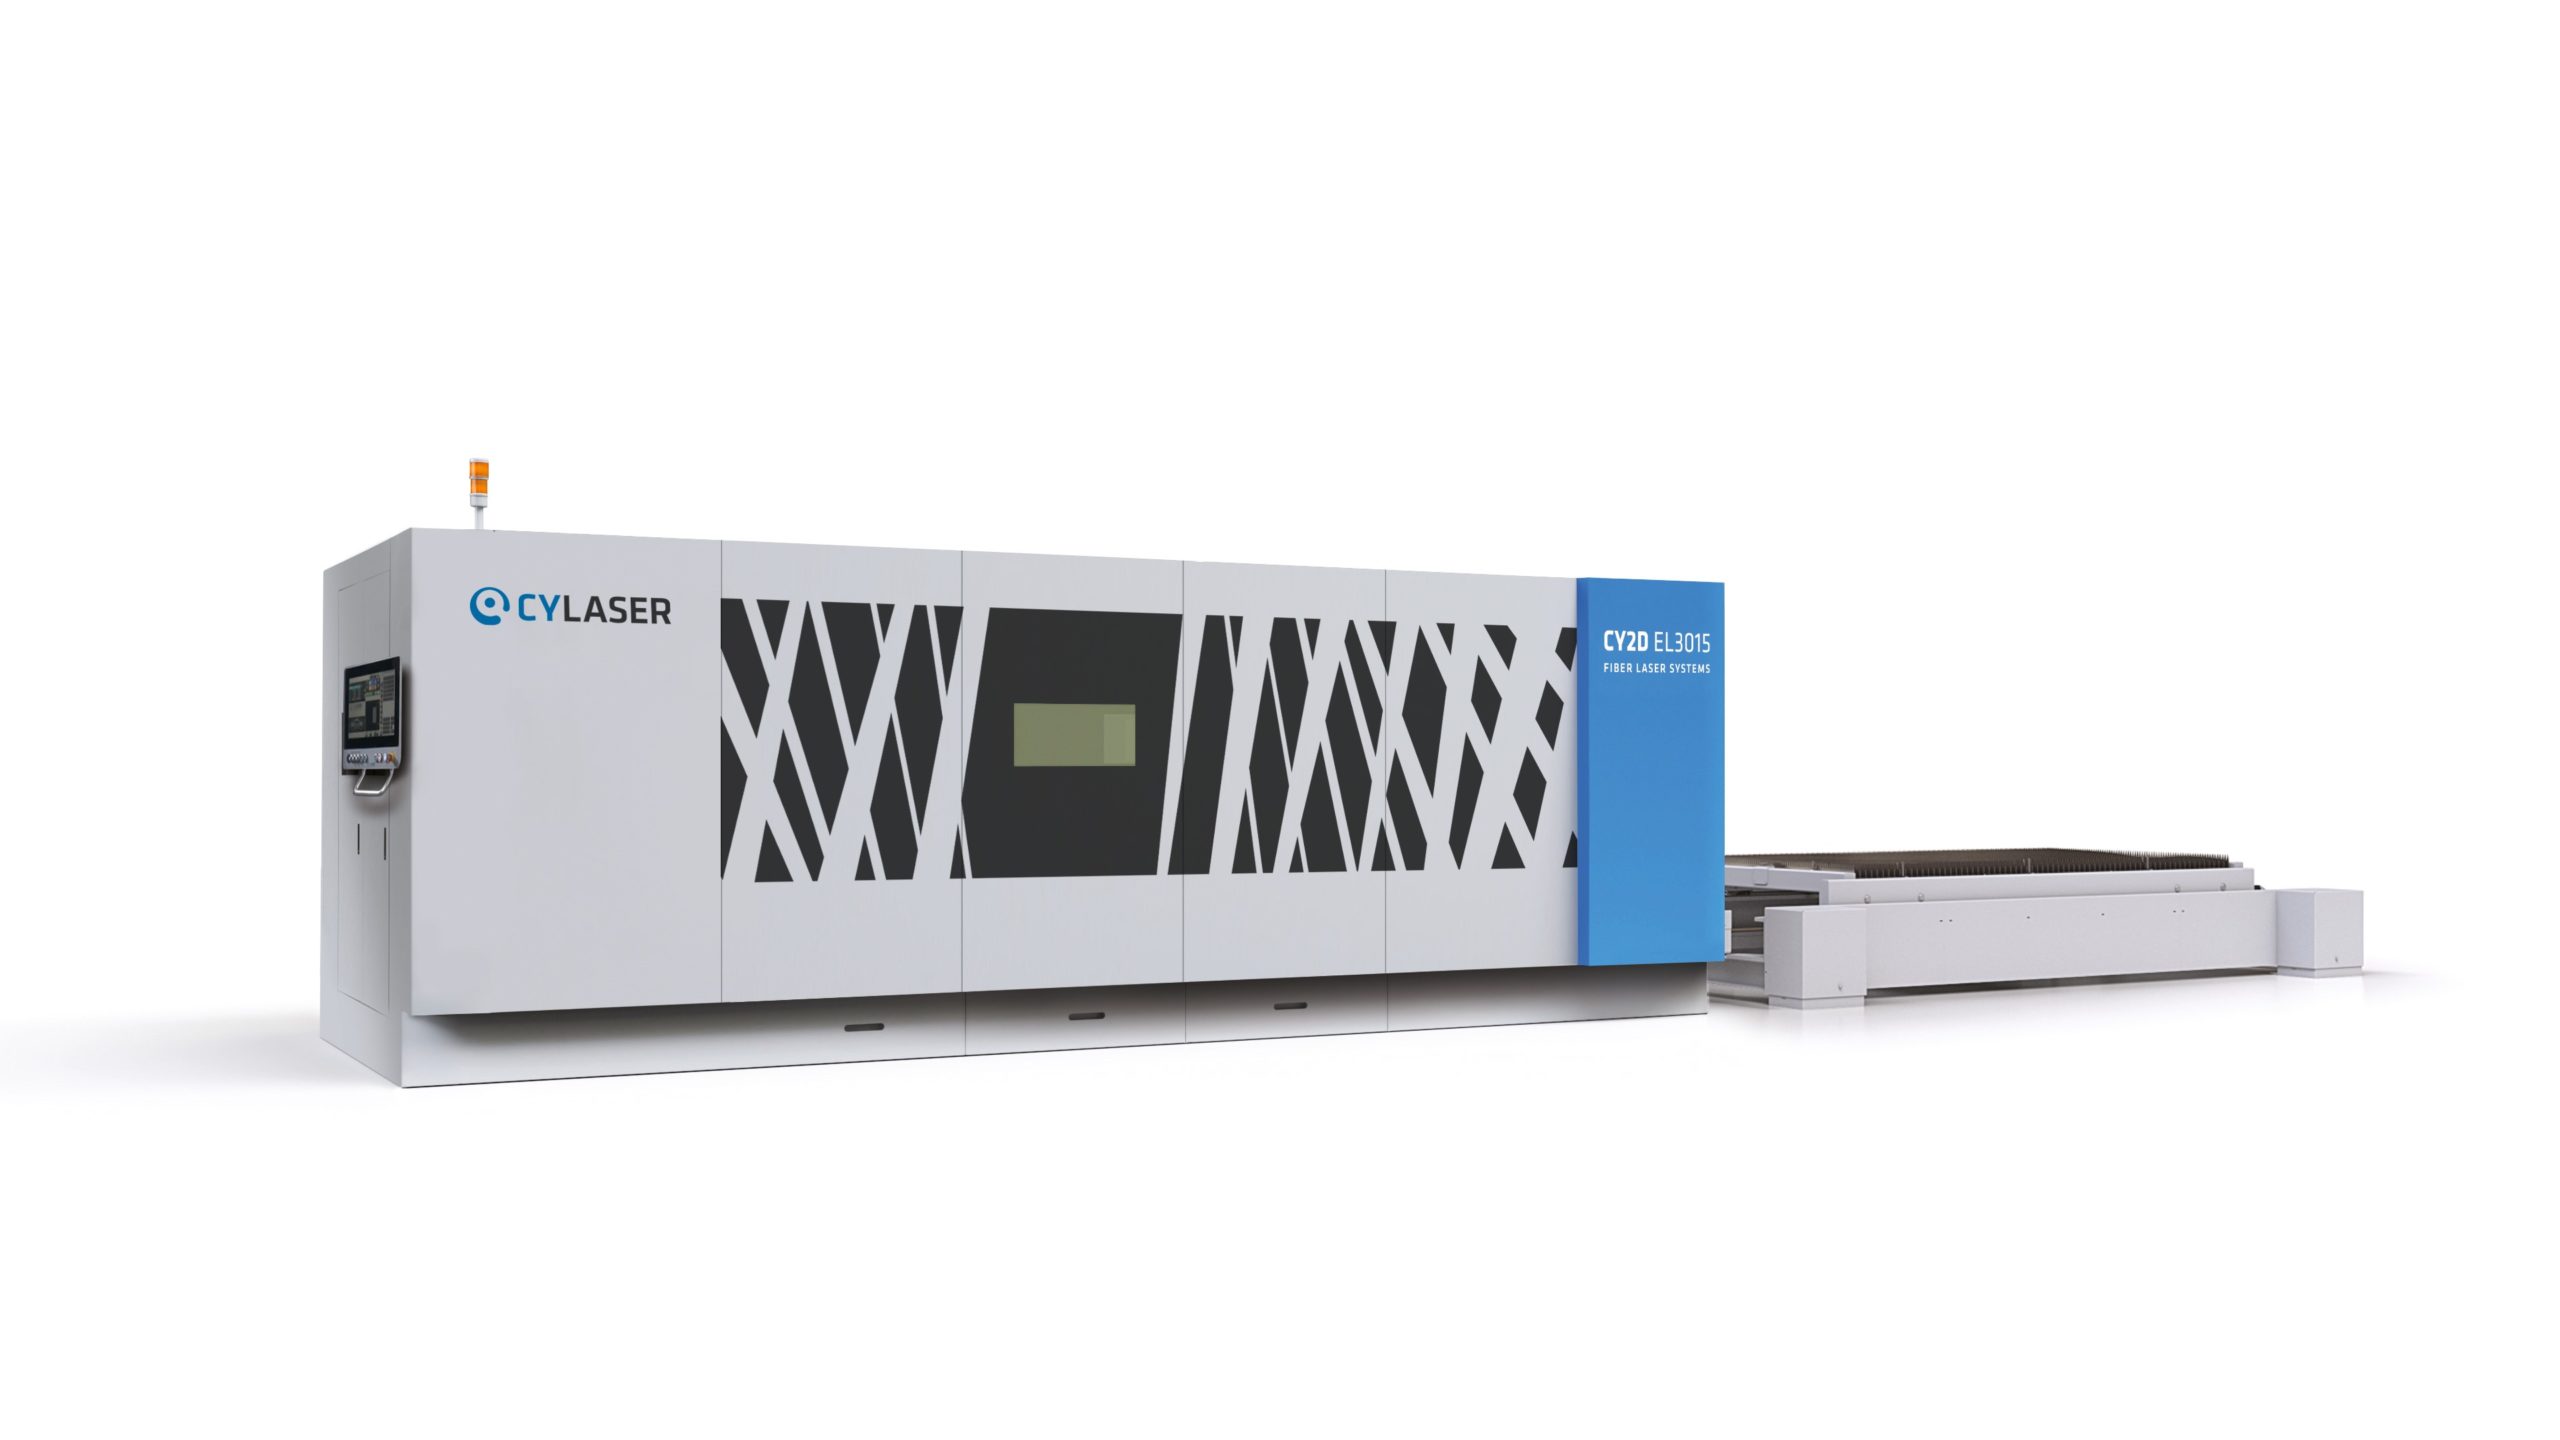 CY2D EL3015 fiber laser system